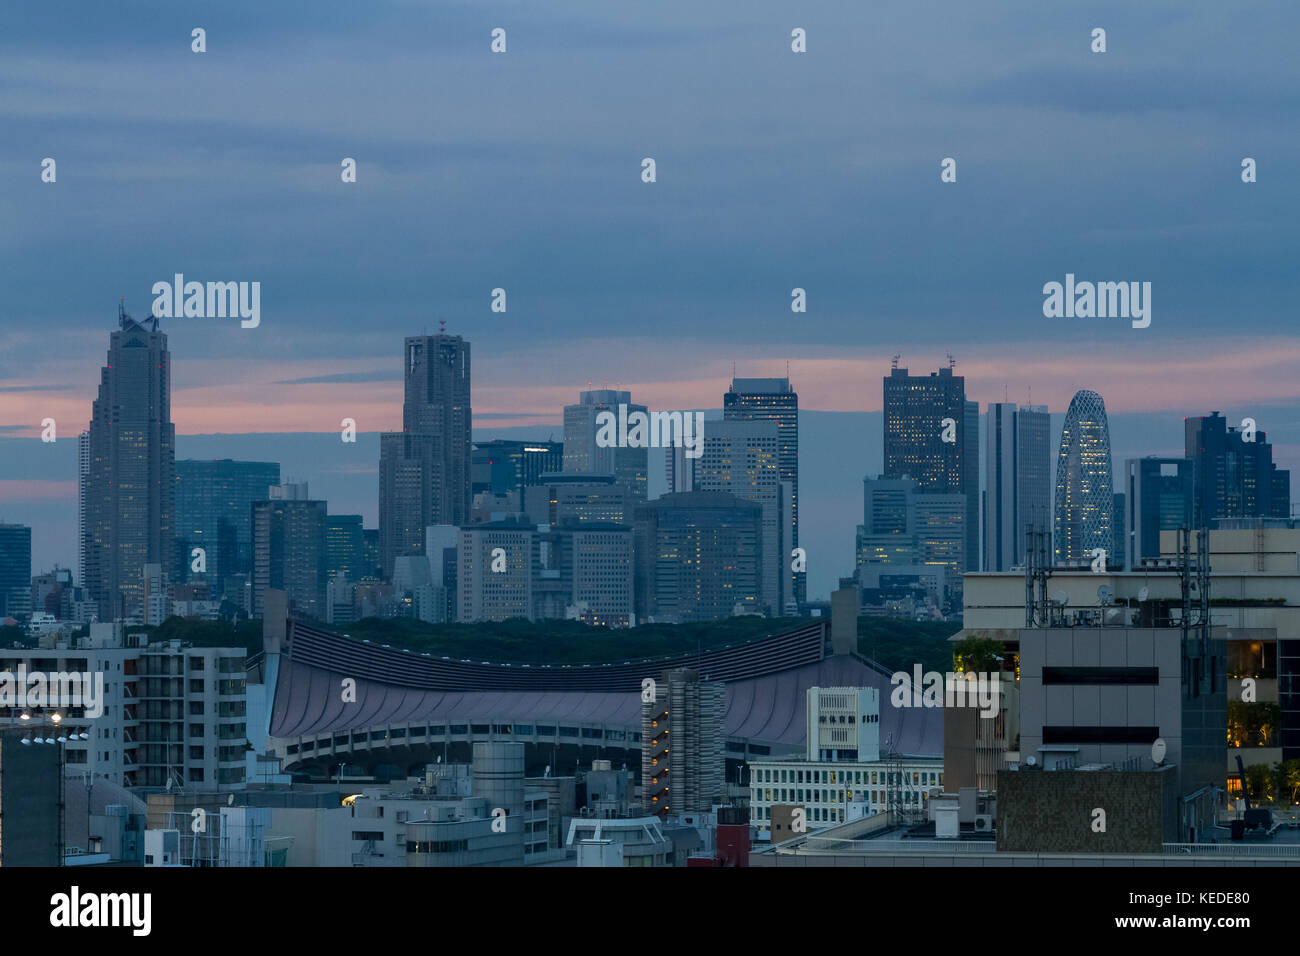 Tokyo city skyline with the Shinjuku skyscrapers and Yoyogi Gymnastic stadium in the foreground, Tokyo, Japan Stock Photo